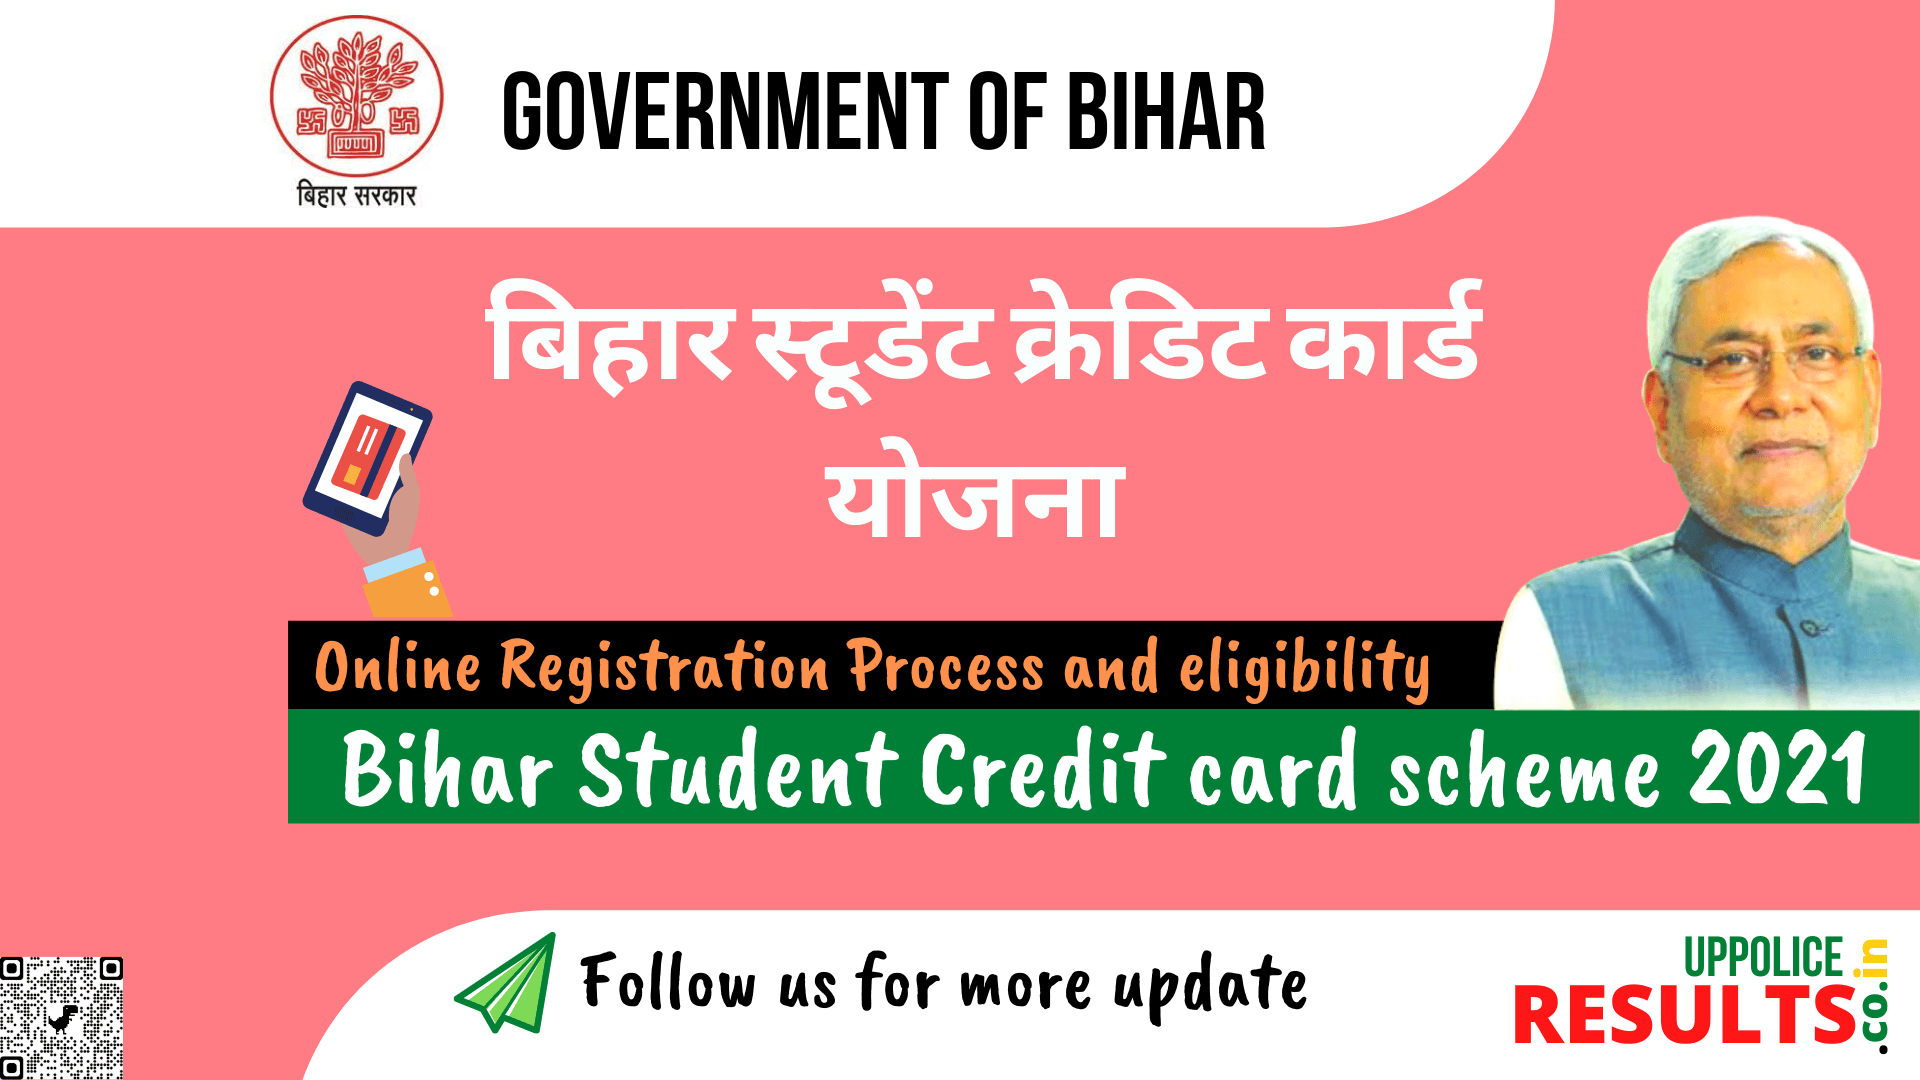 Bihar Student Credit card scheme 2021